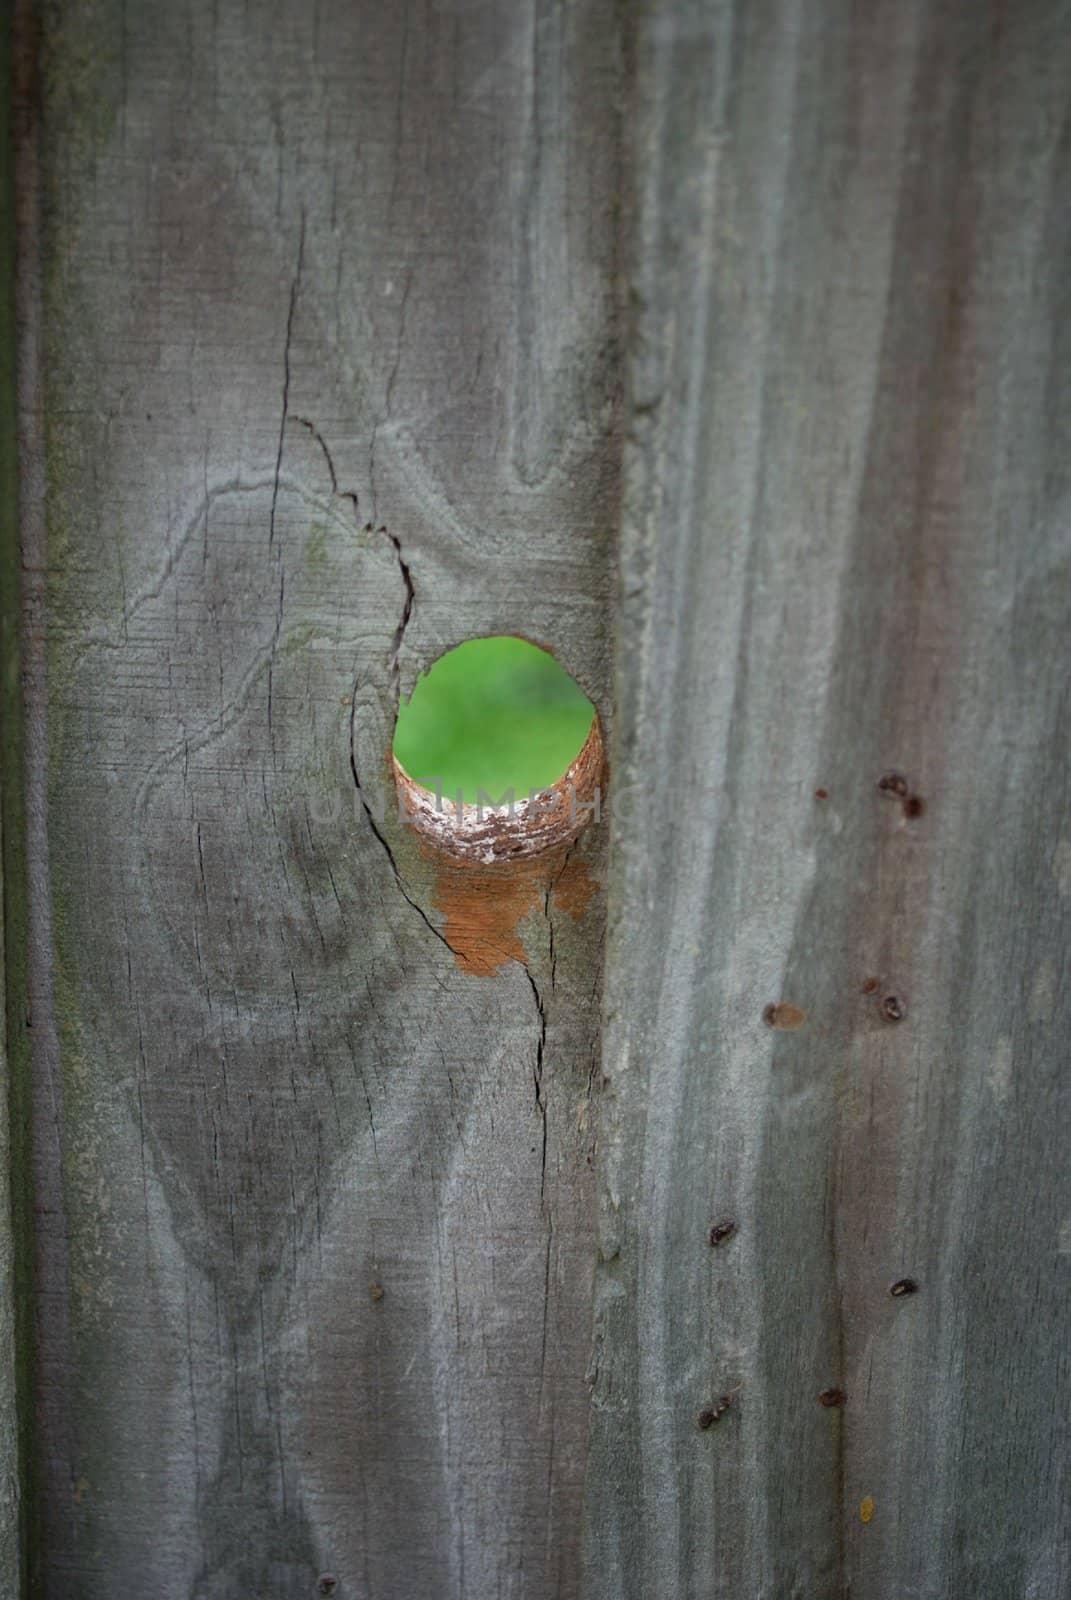 hole in the fence no peeking